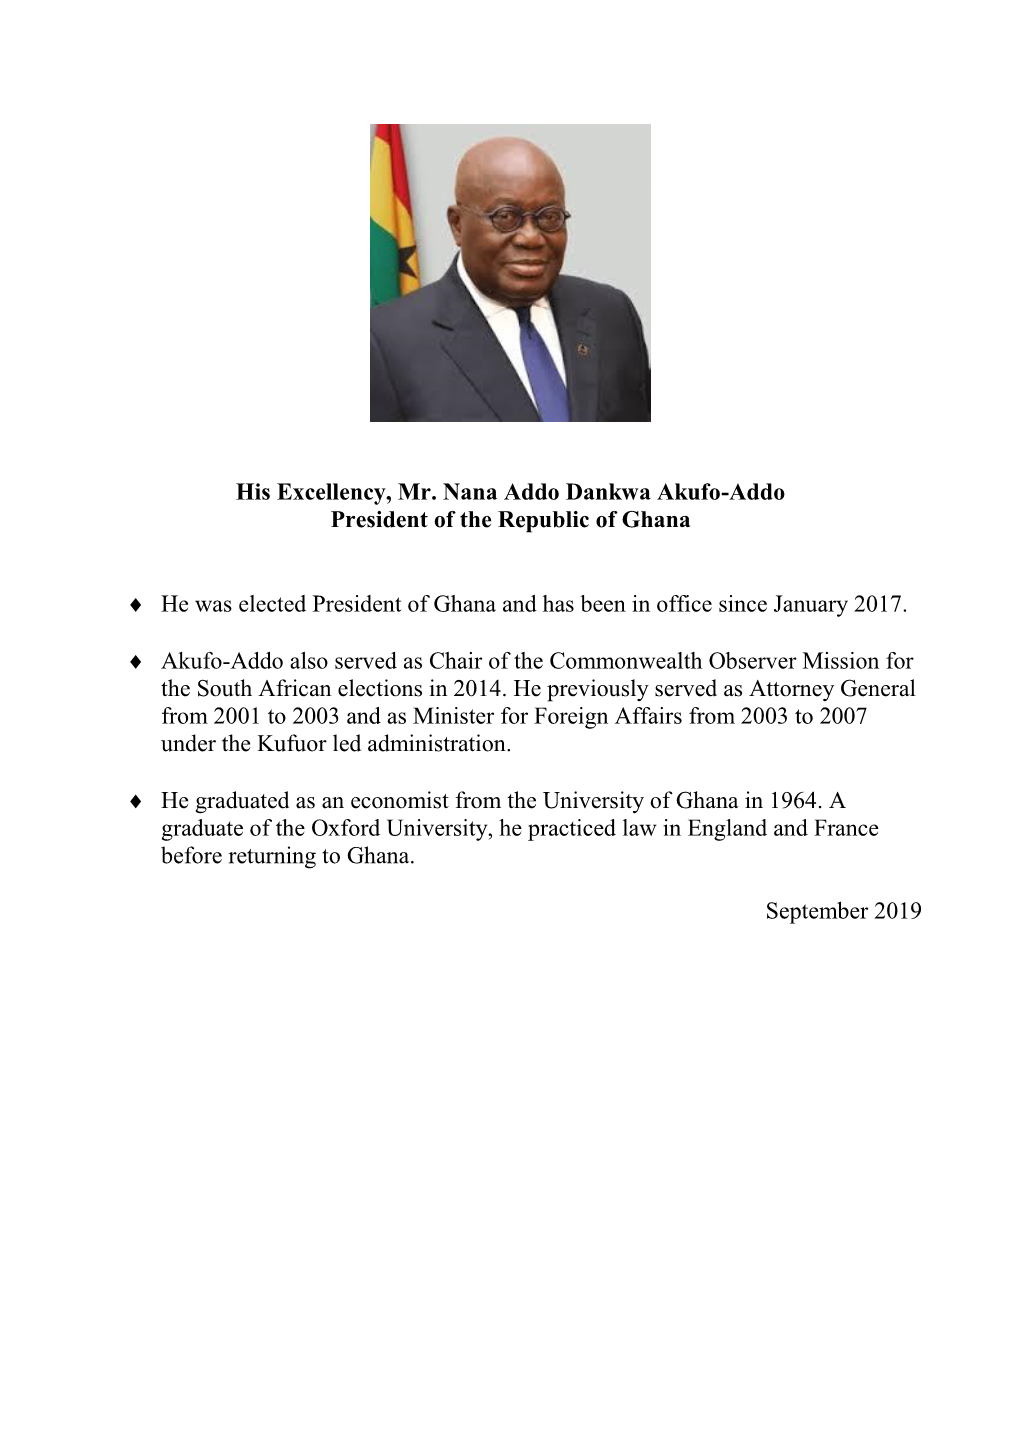 His Excellency, Mr. Nana Addo Dankwa Akufo-Addo President of the Republic of Ghana